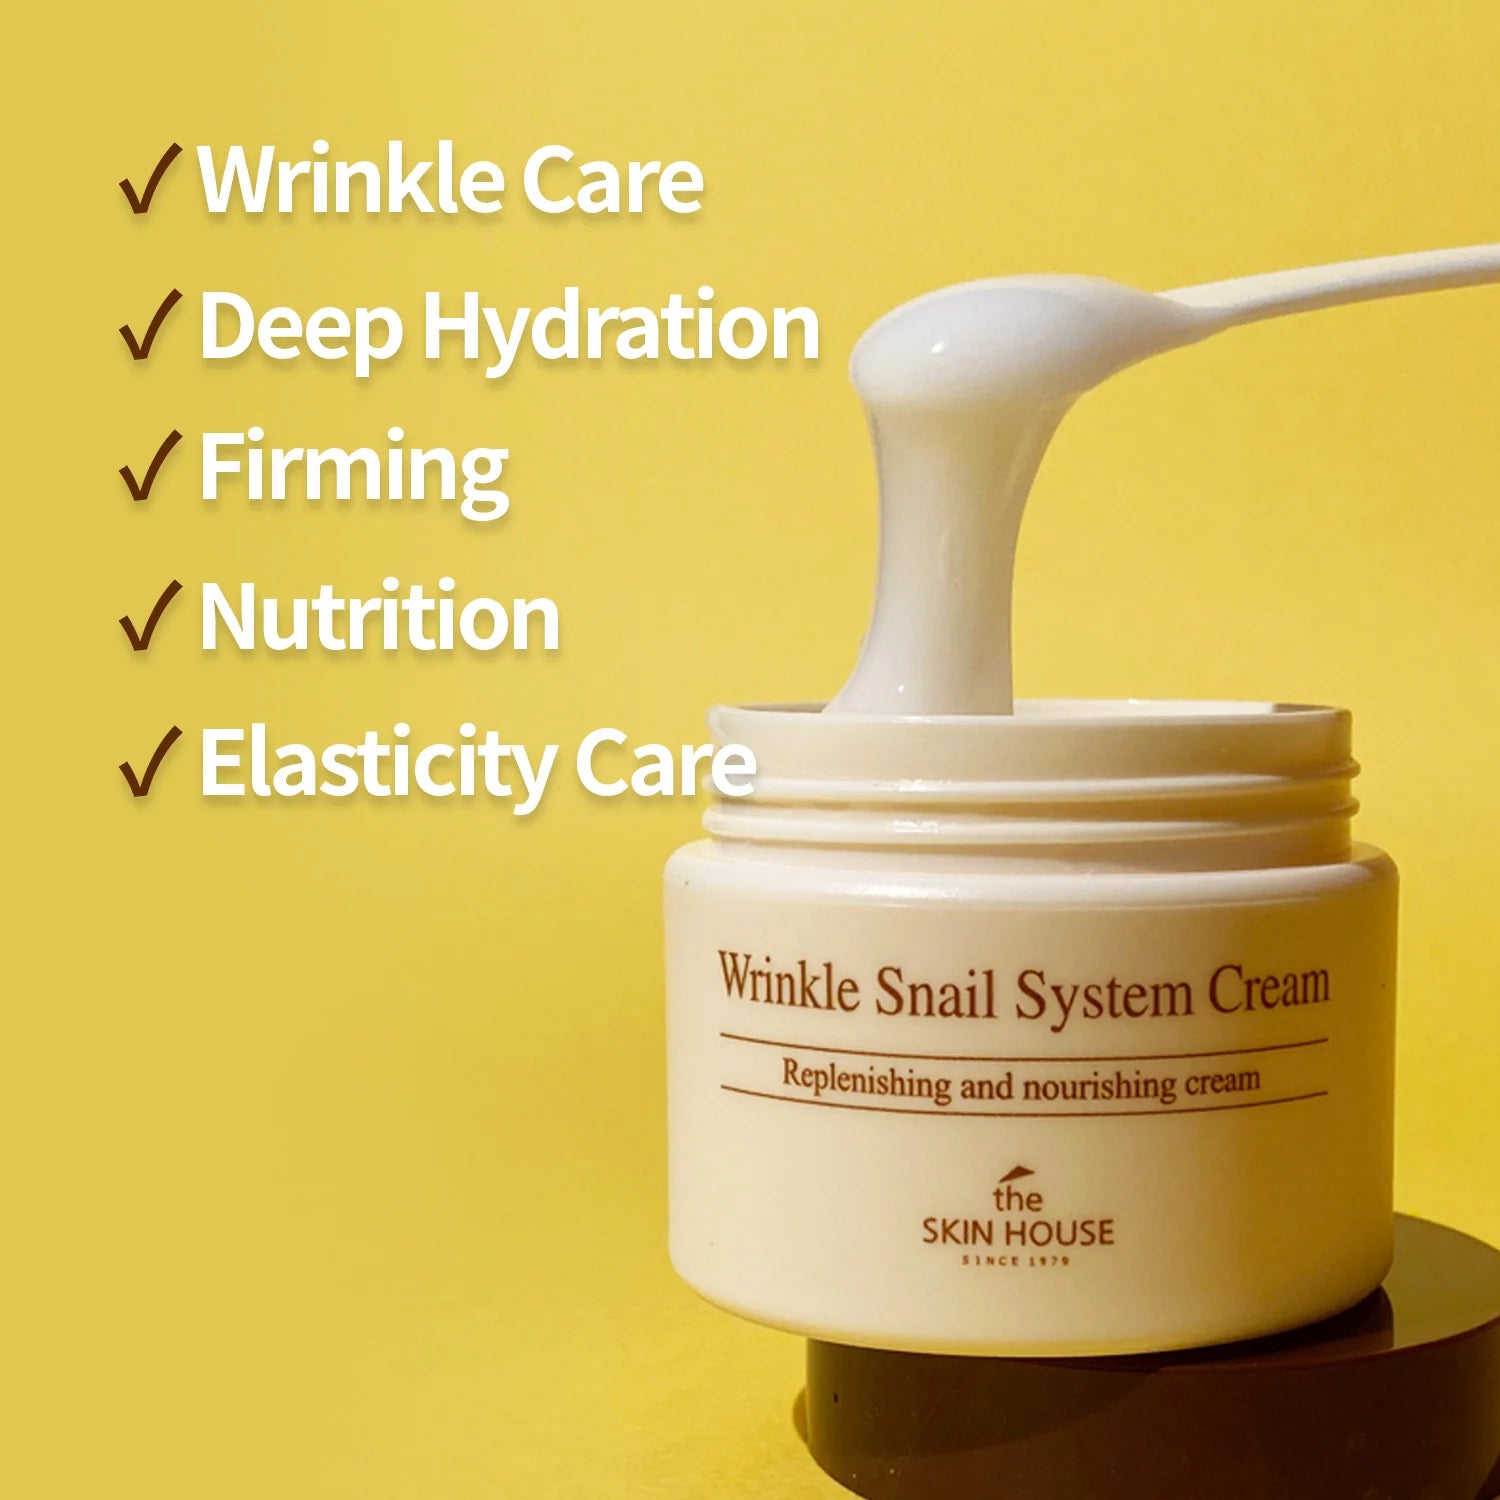 the SKIN HOUSE Wrinkle Snail System Cream